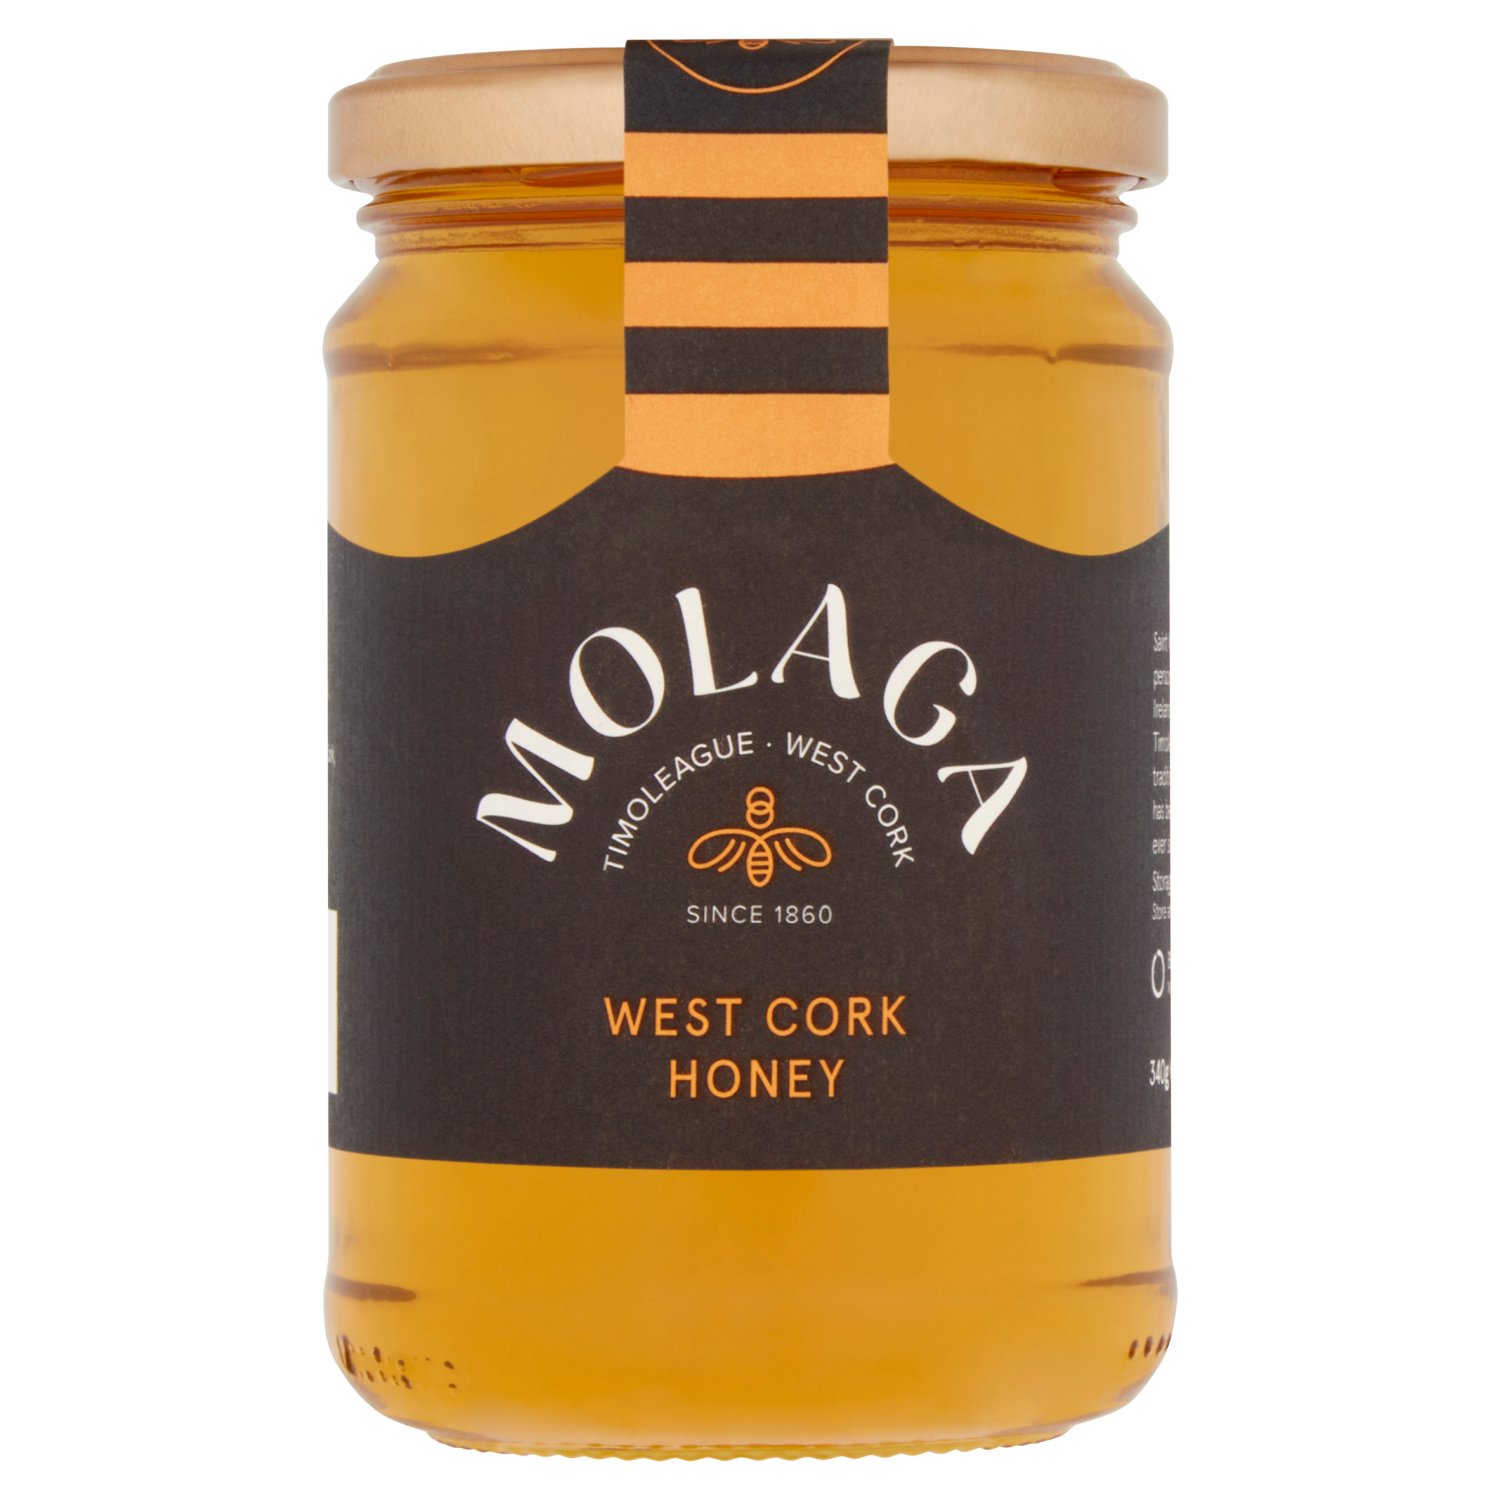 Molaga West Cork Honey Jar (340 g)